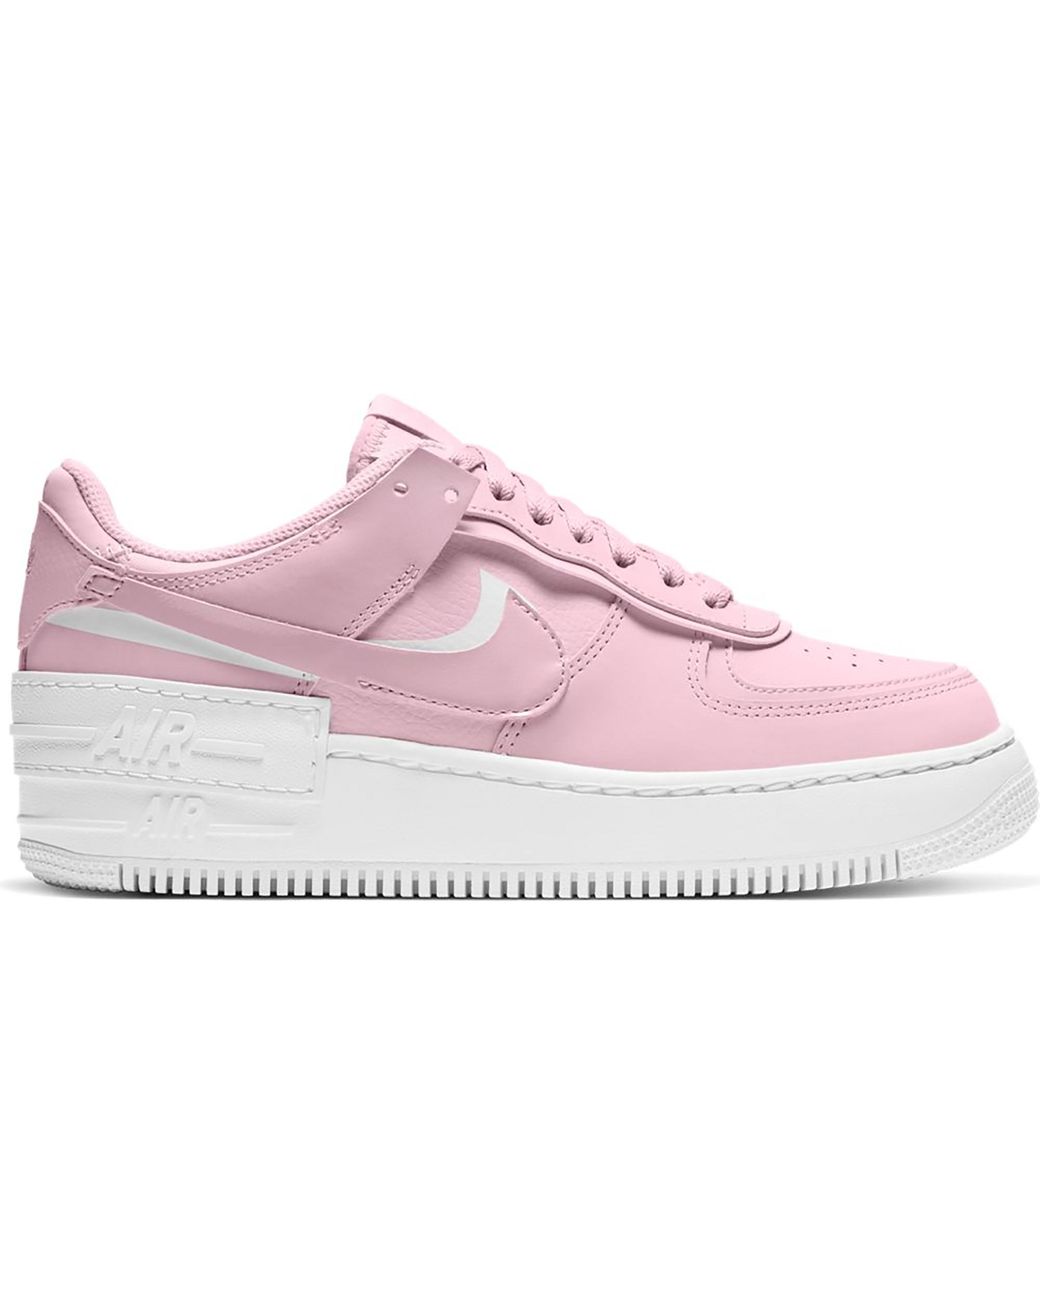 nike shadow air force pink